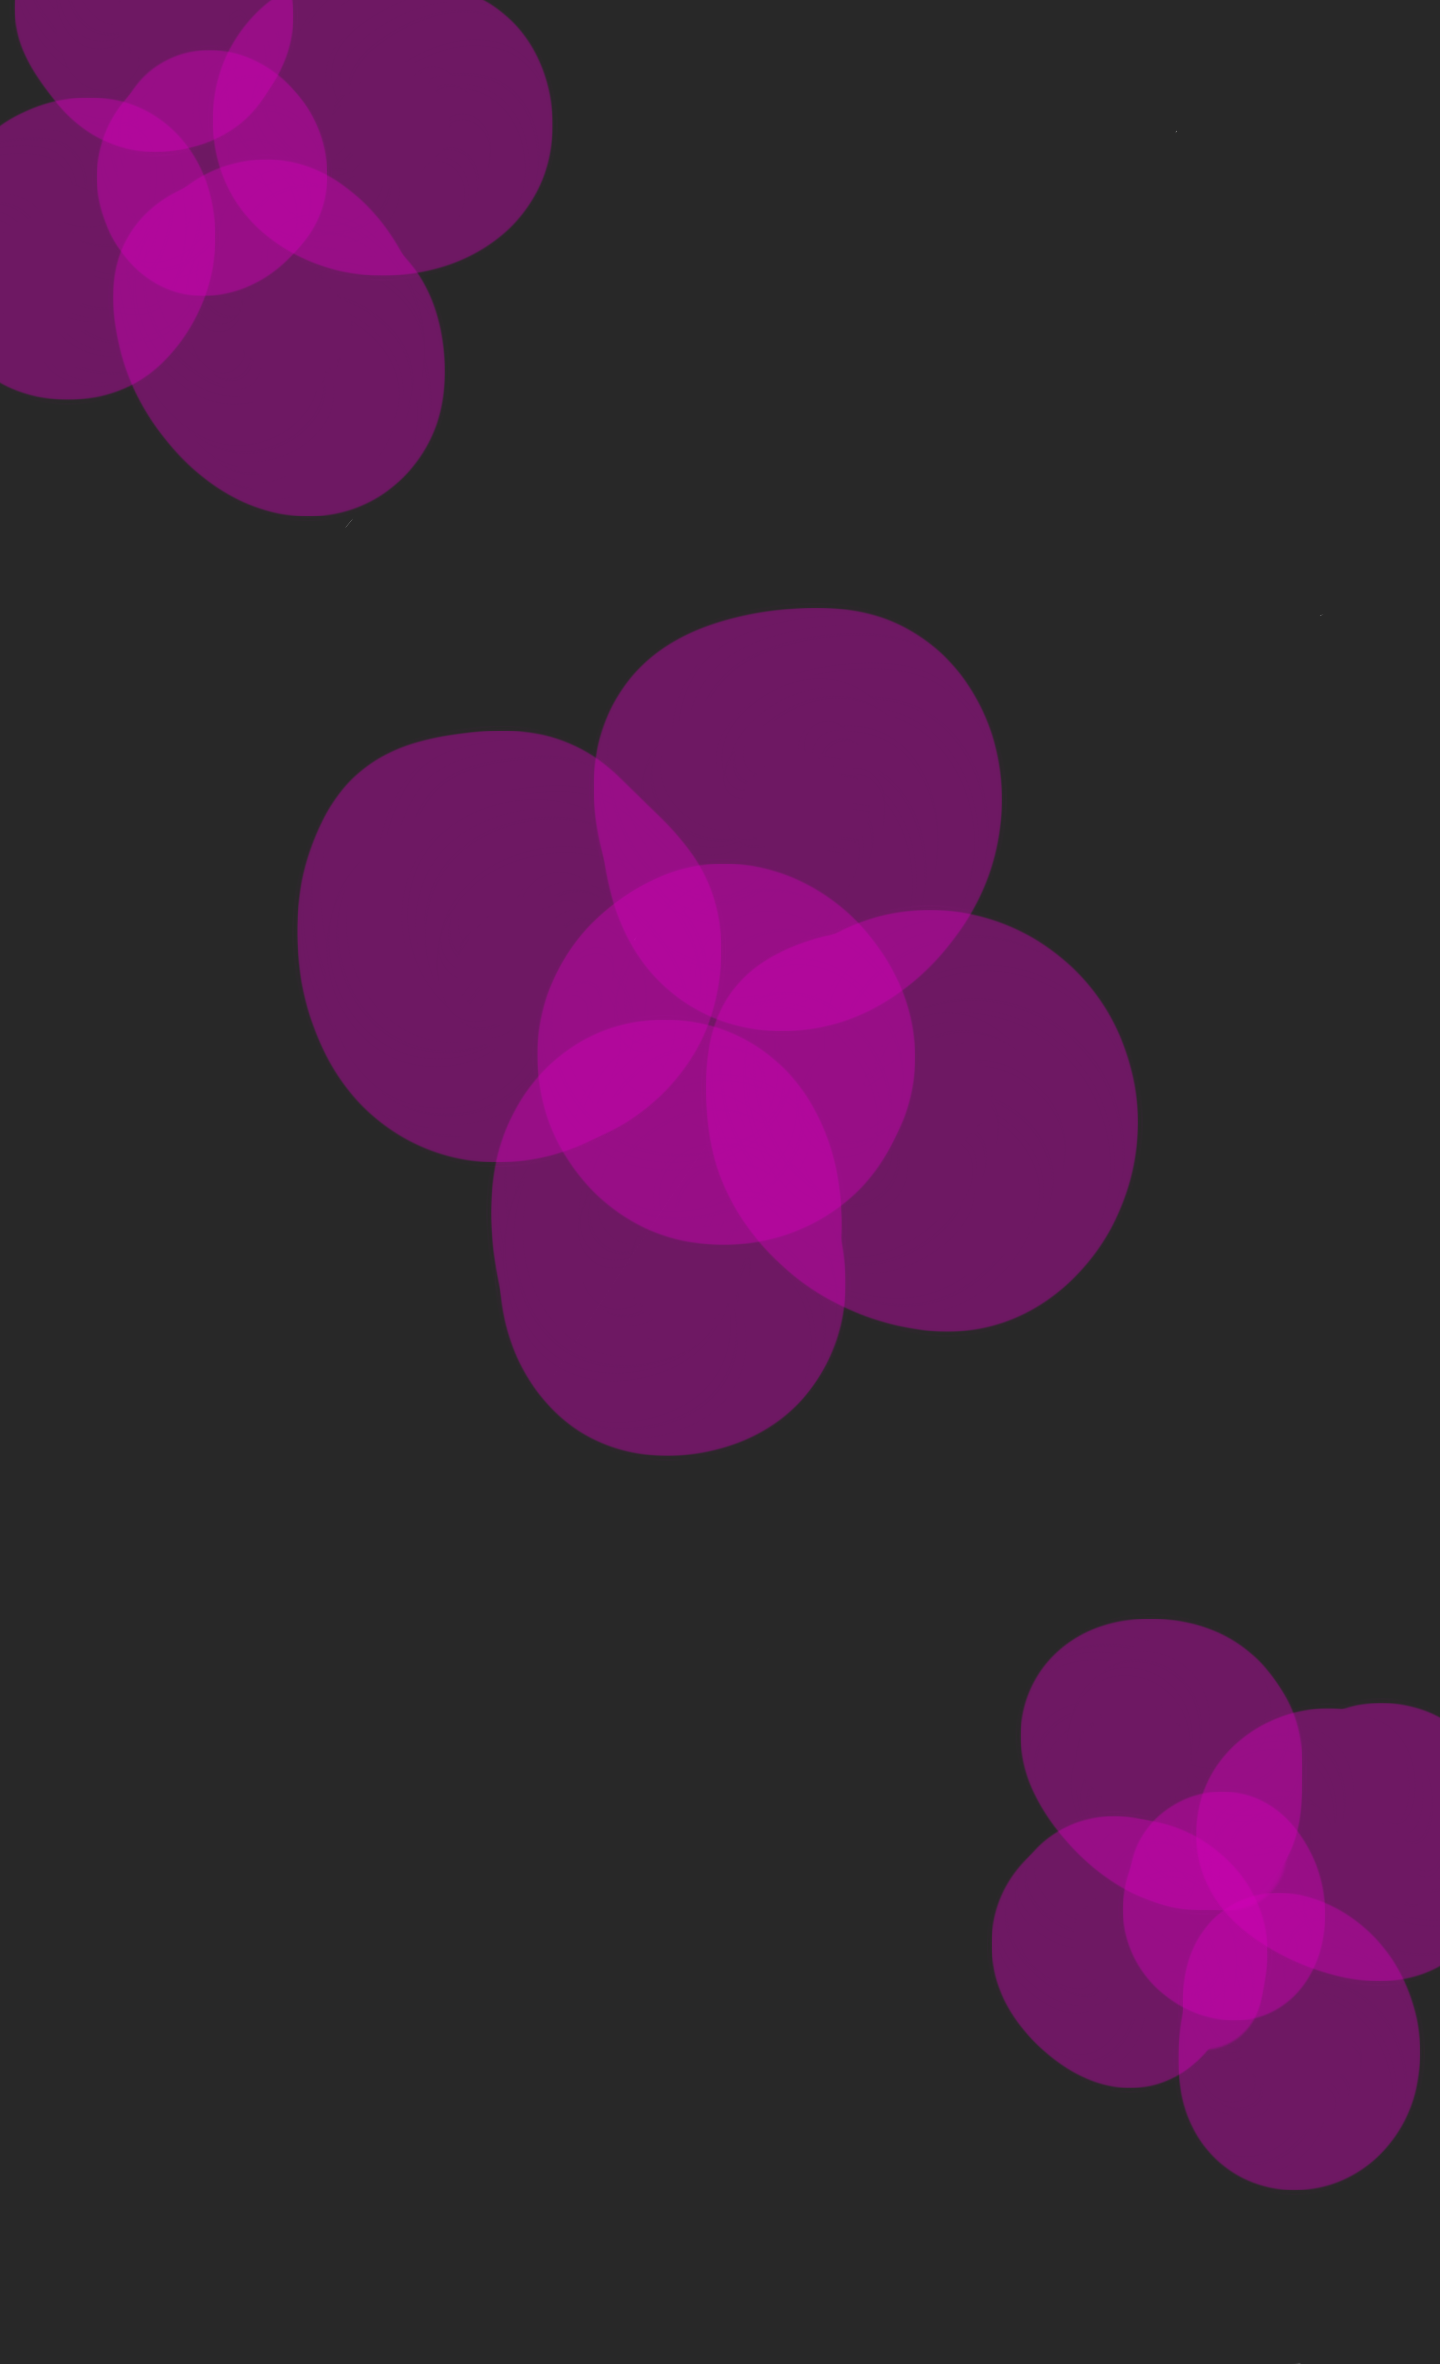 General 1440x2364 abstract purple minimalism flowers black background simple background digital art